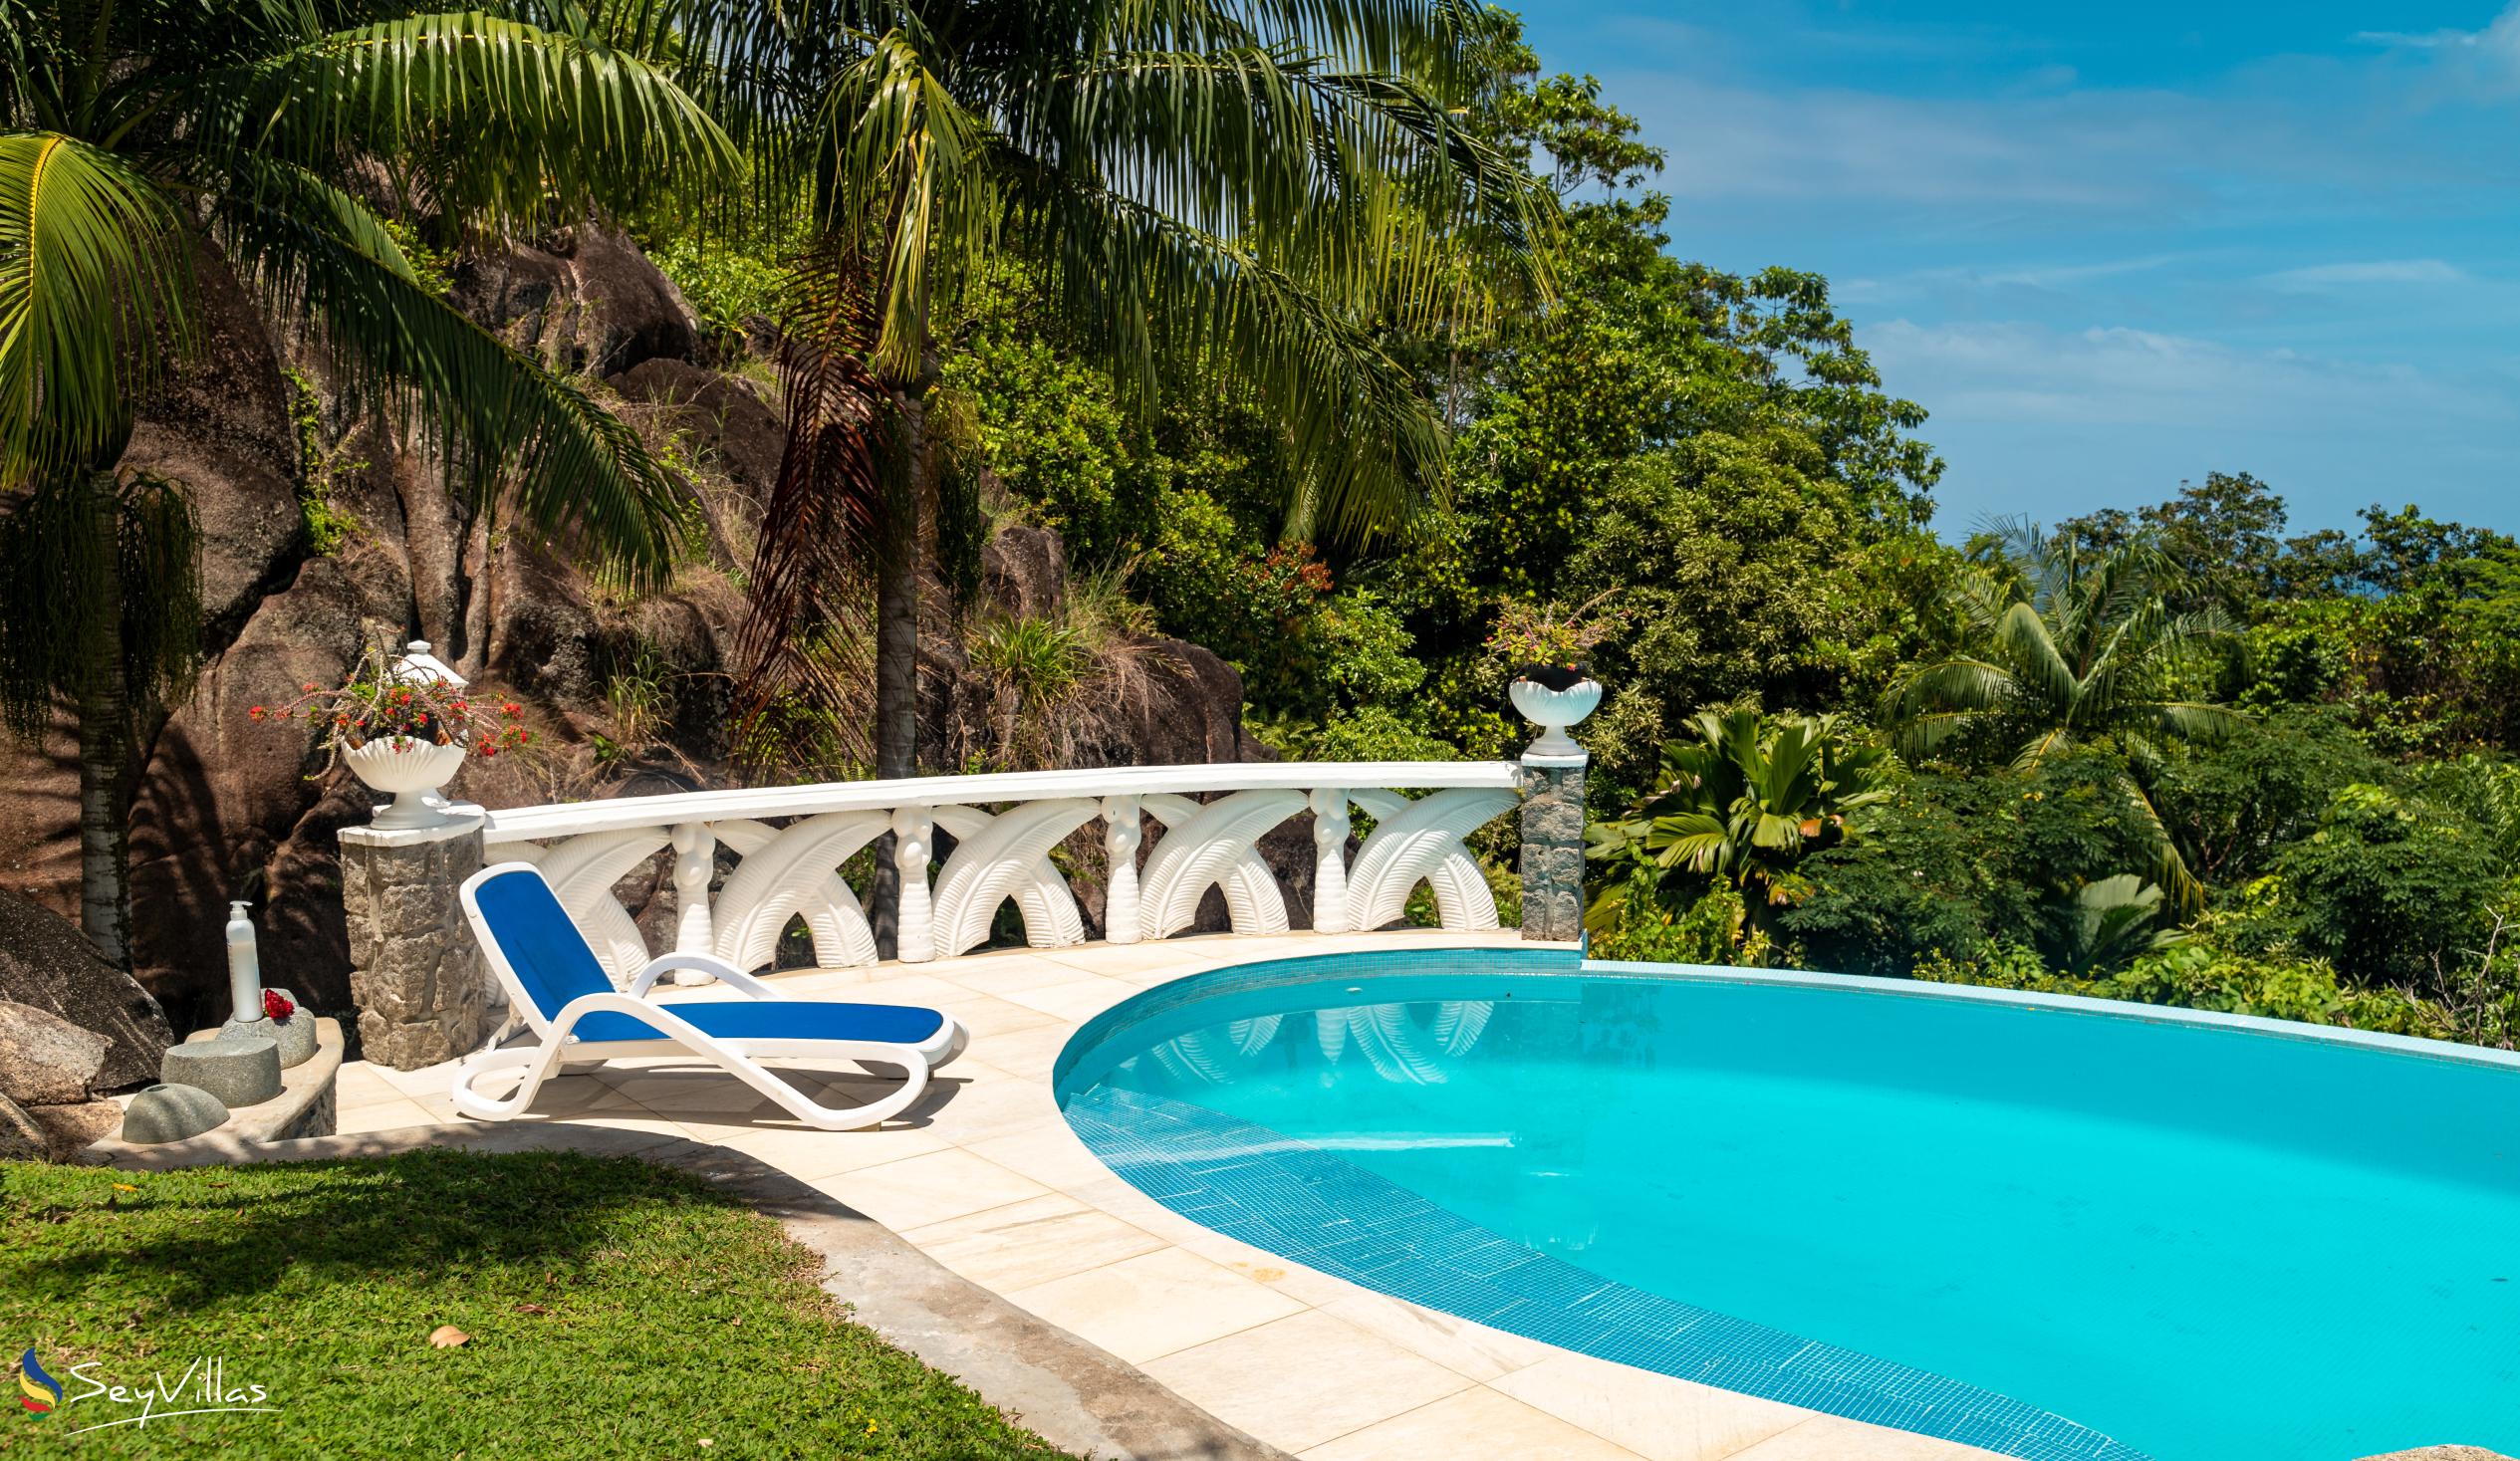 Foto 15: Villa Gazebo - Aussenbereich - Mahé (Seychellen)